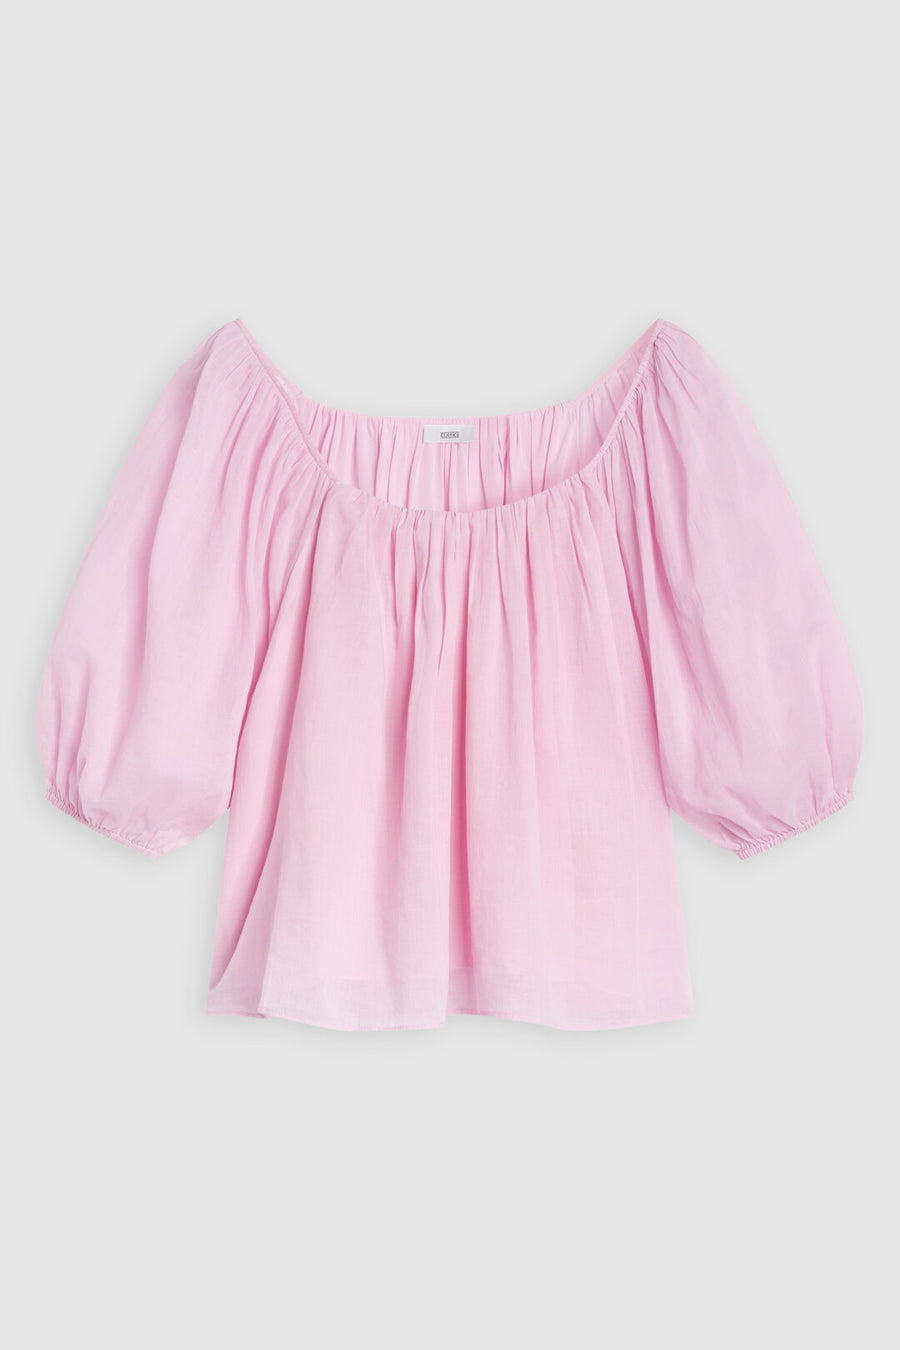 Closed Women's Bluse - Dahlia Pink